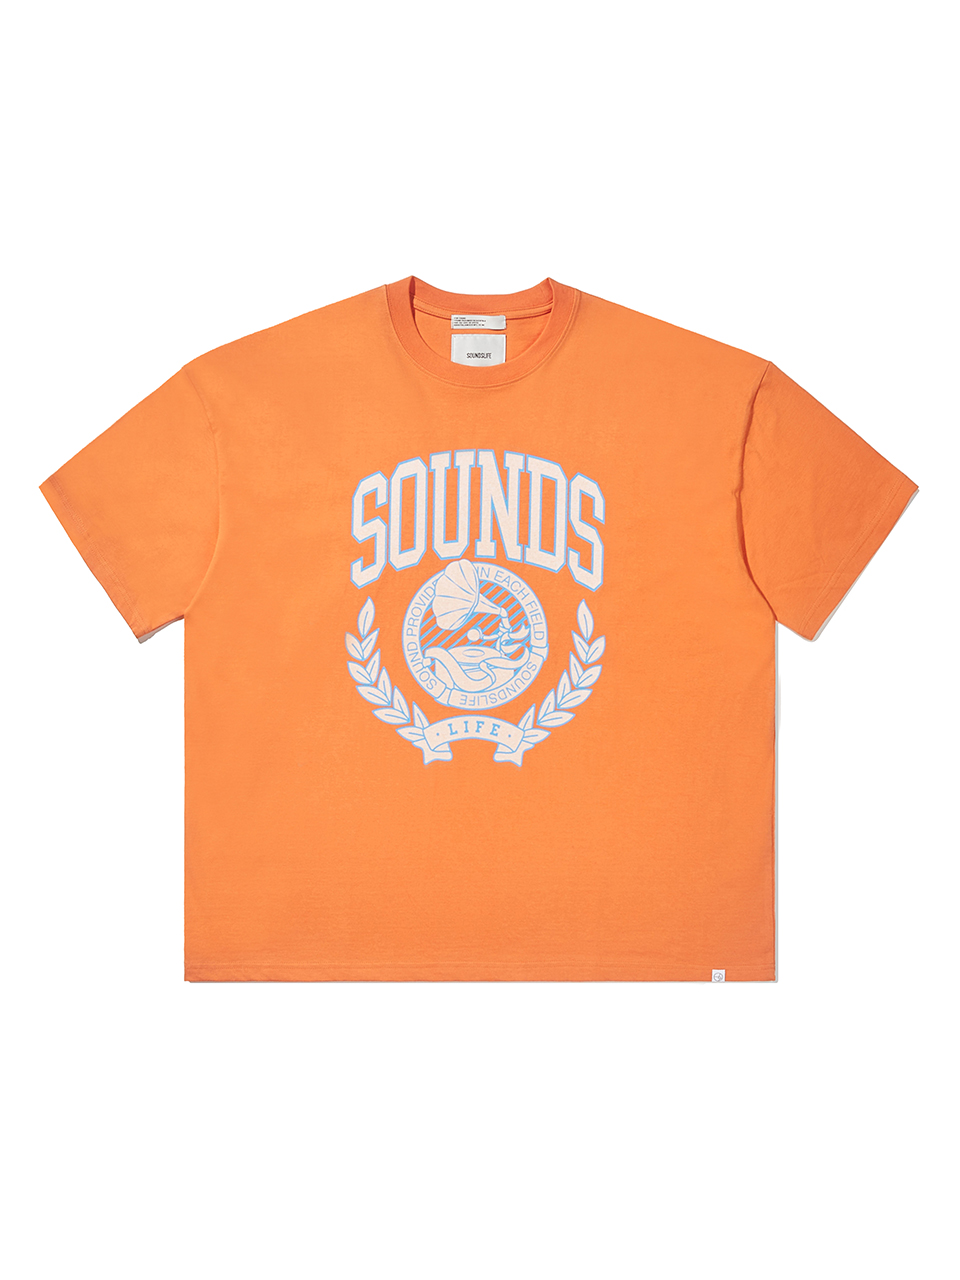 SOUNDSLIFE - Sounds Graphic T-Shirt Orange